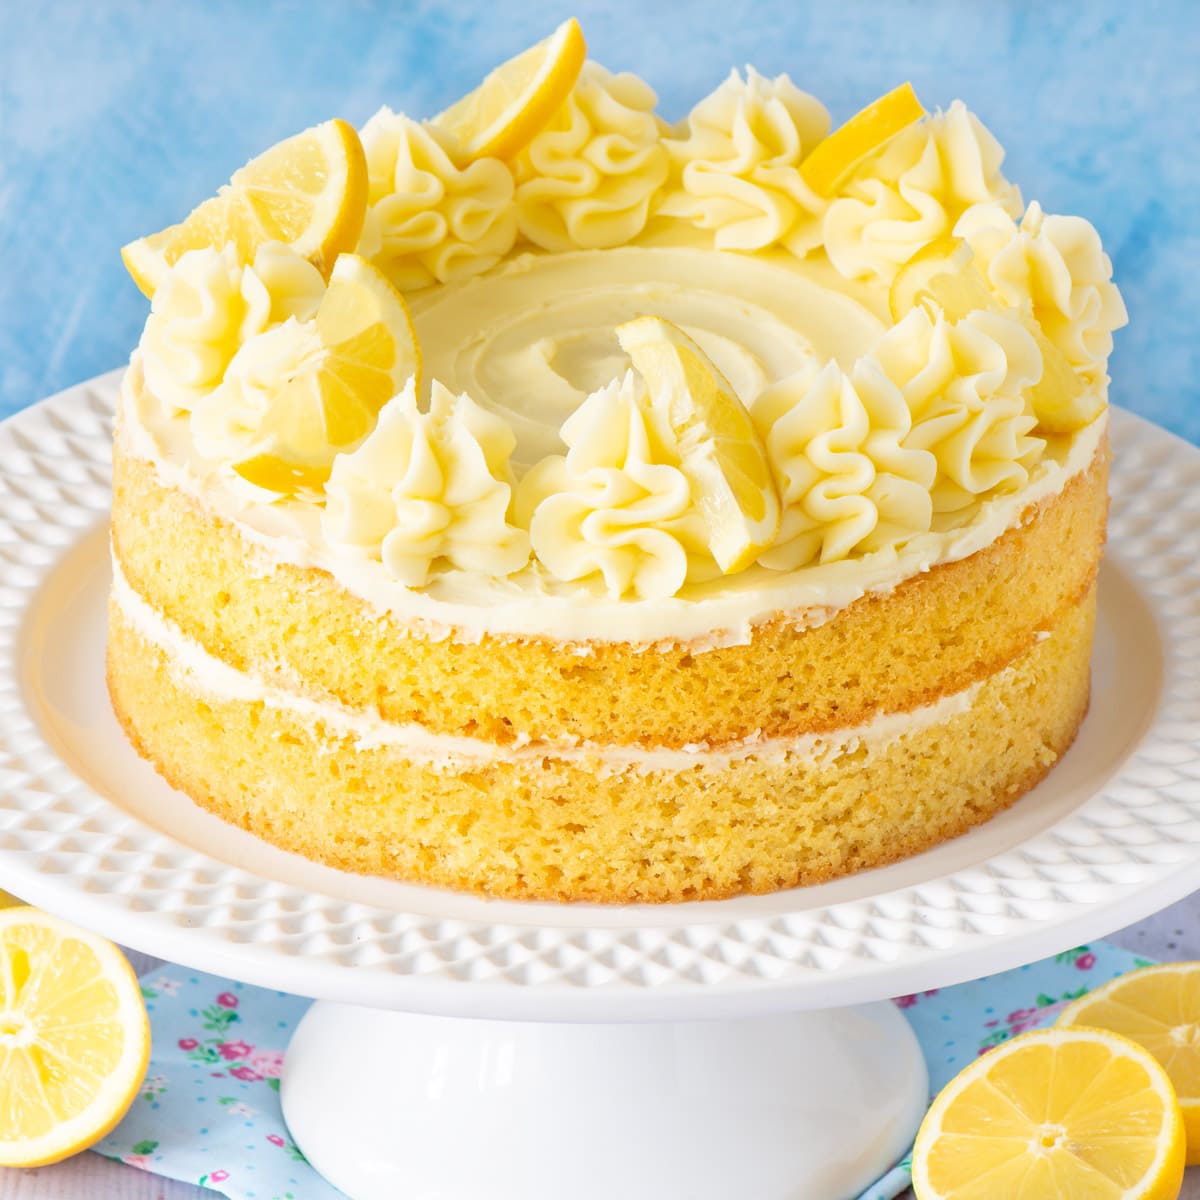 Lemon cake topped with lemon buttercream on a white cake stand.